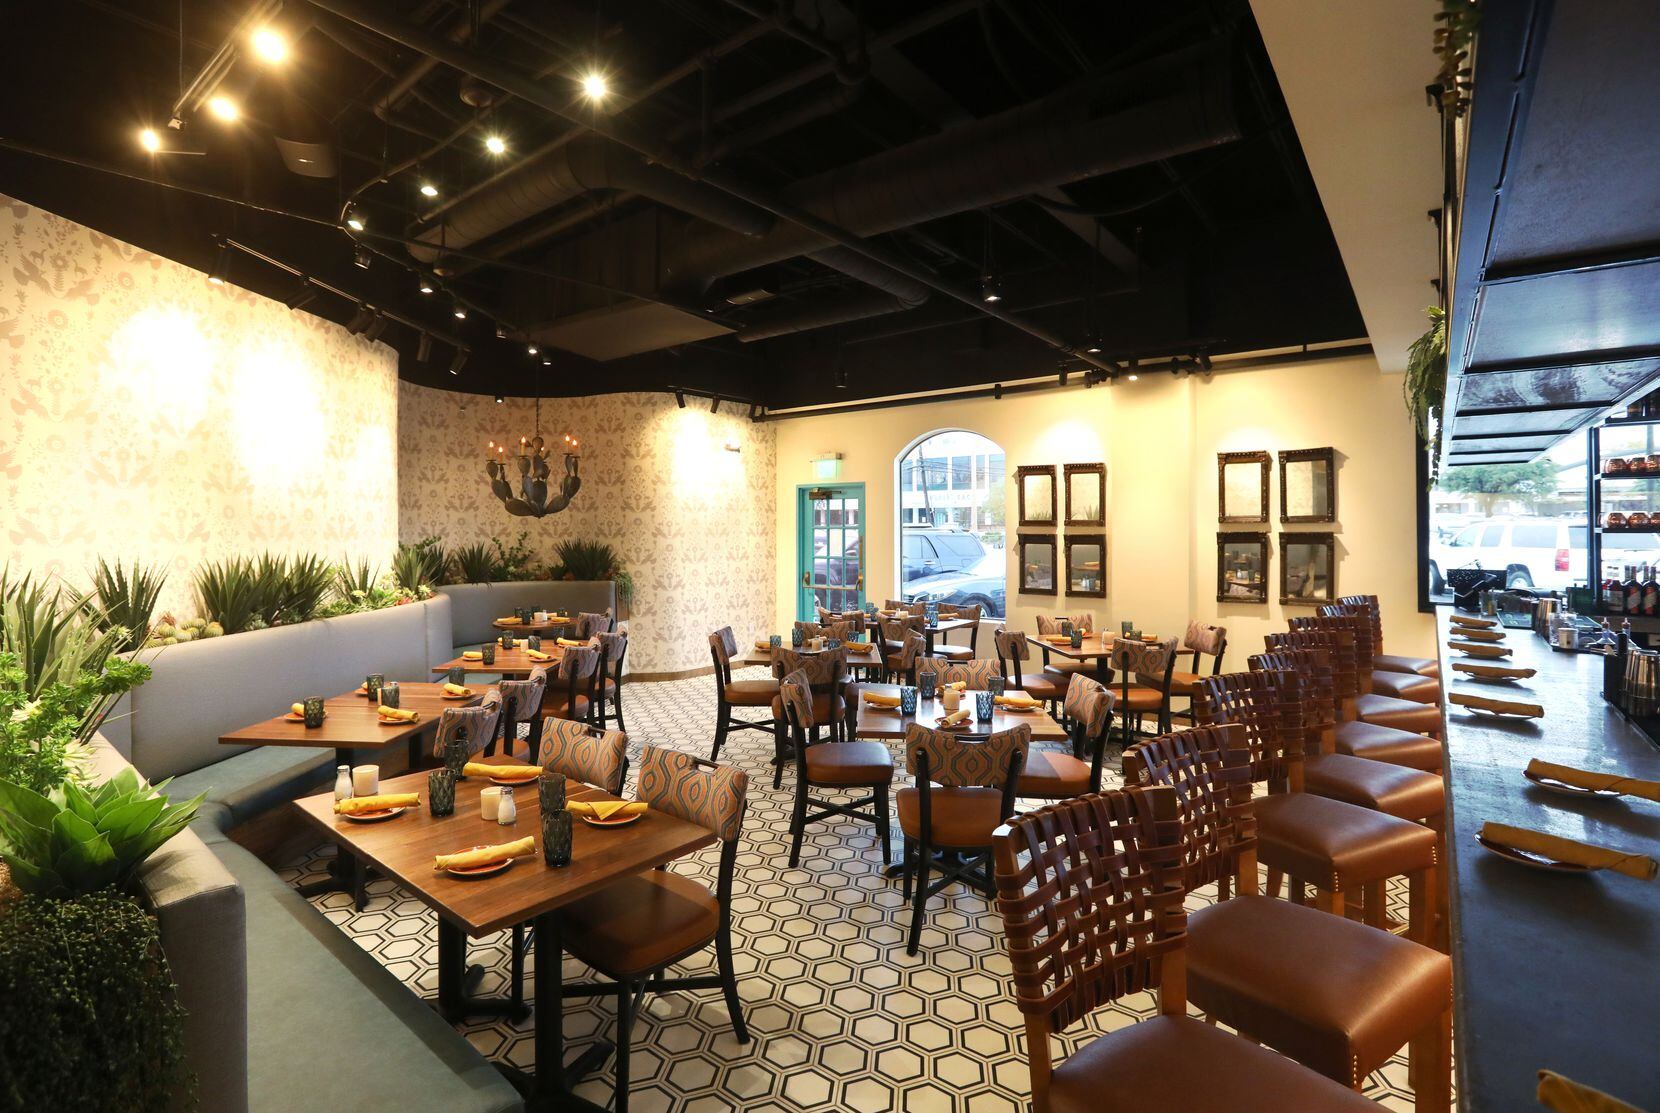 The dining area at Escondido in Dallas, TX, on Nov 11, 2022. (Jason Janik/Special Contributor)